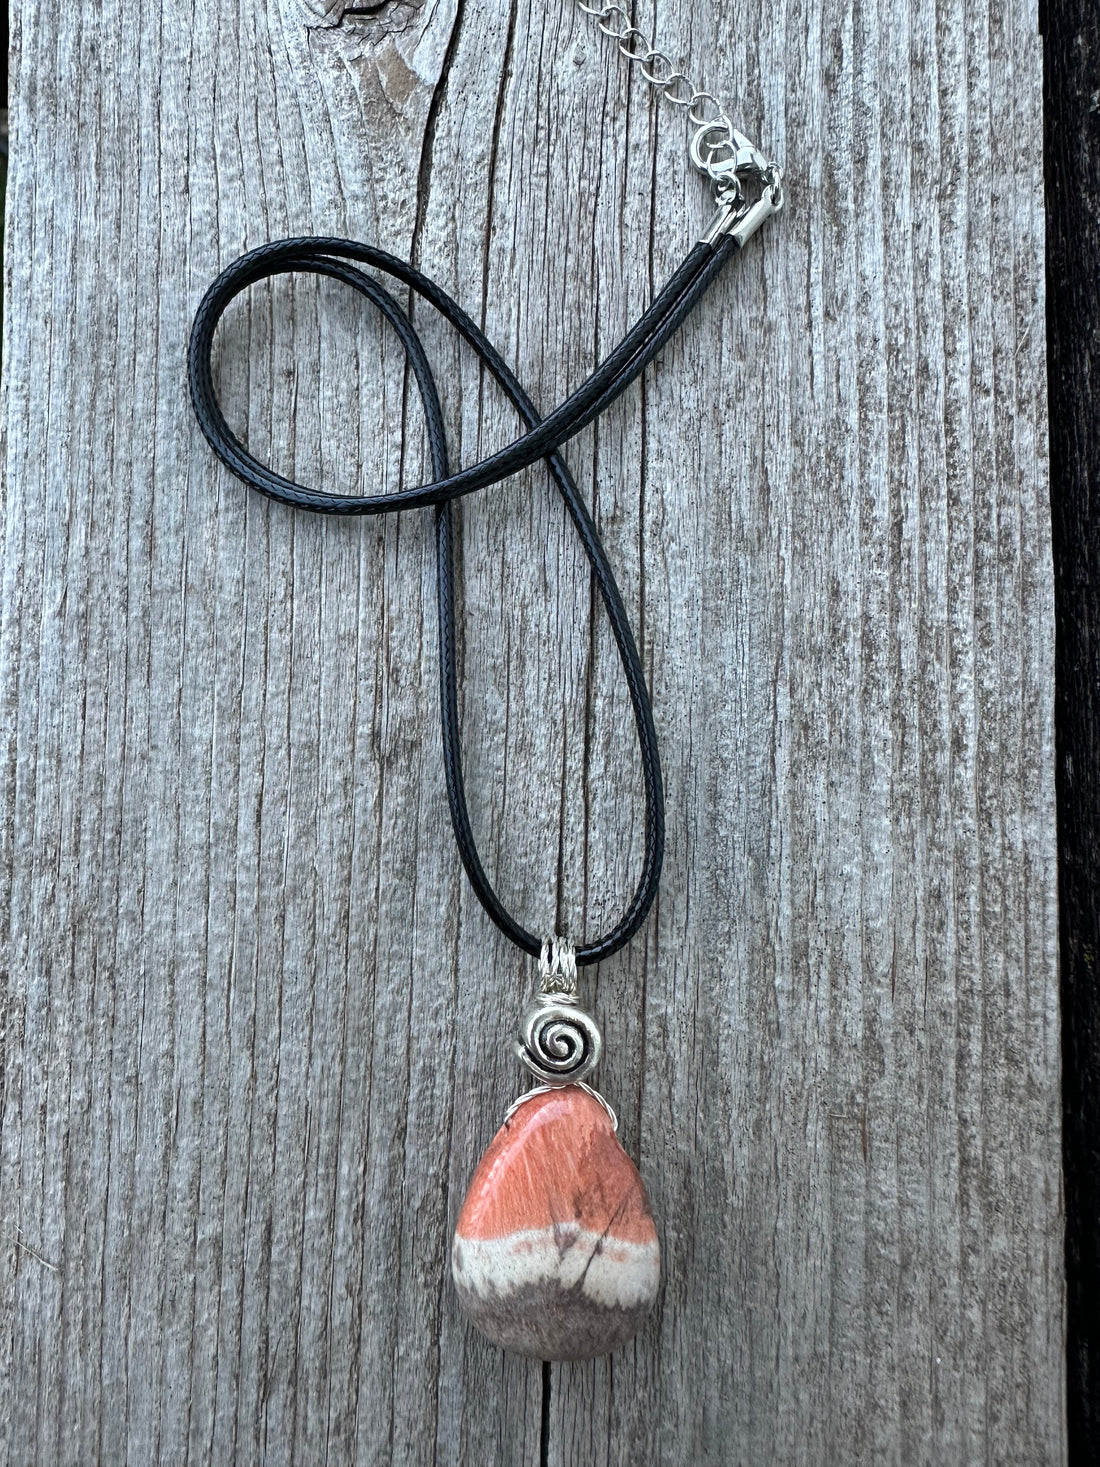 Celestobarite  Necklace - Shaman Stone for Spiritual Awakening. Swirl Signifies Consciousness